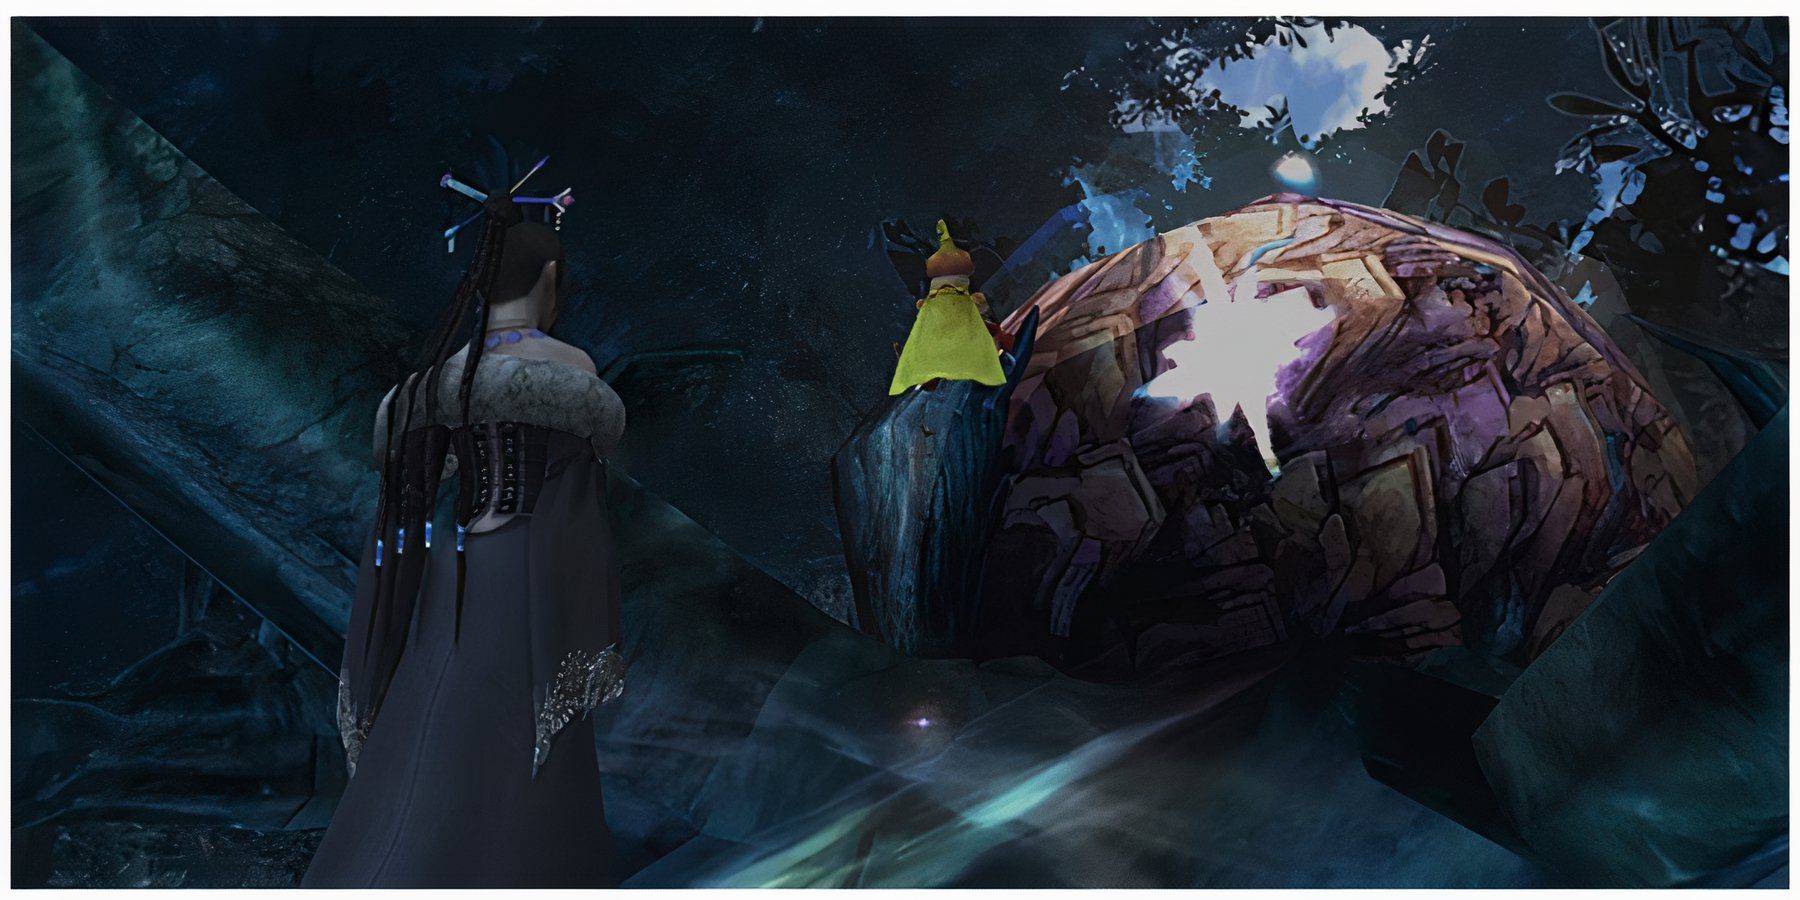 Lulu using Onion knight in Final Fantasy 10